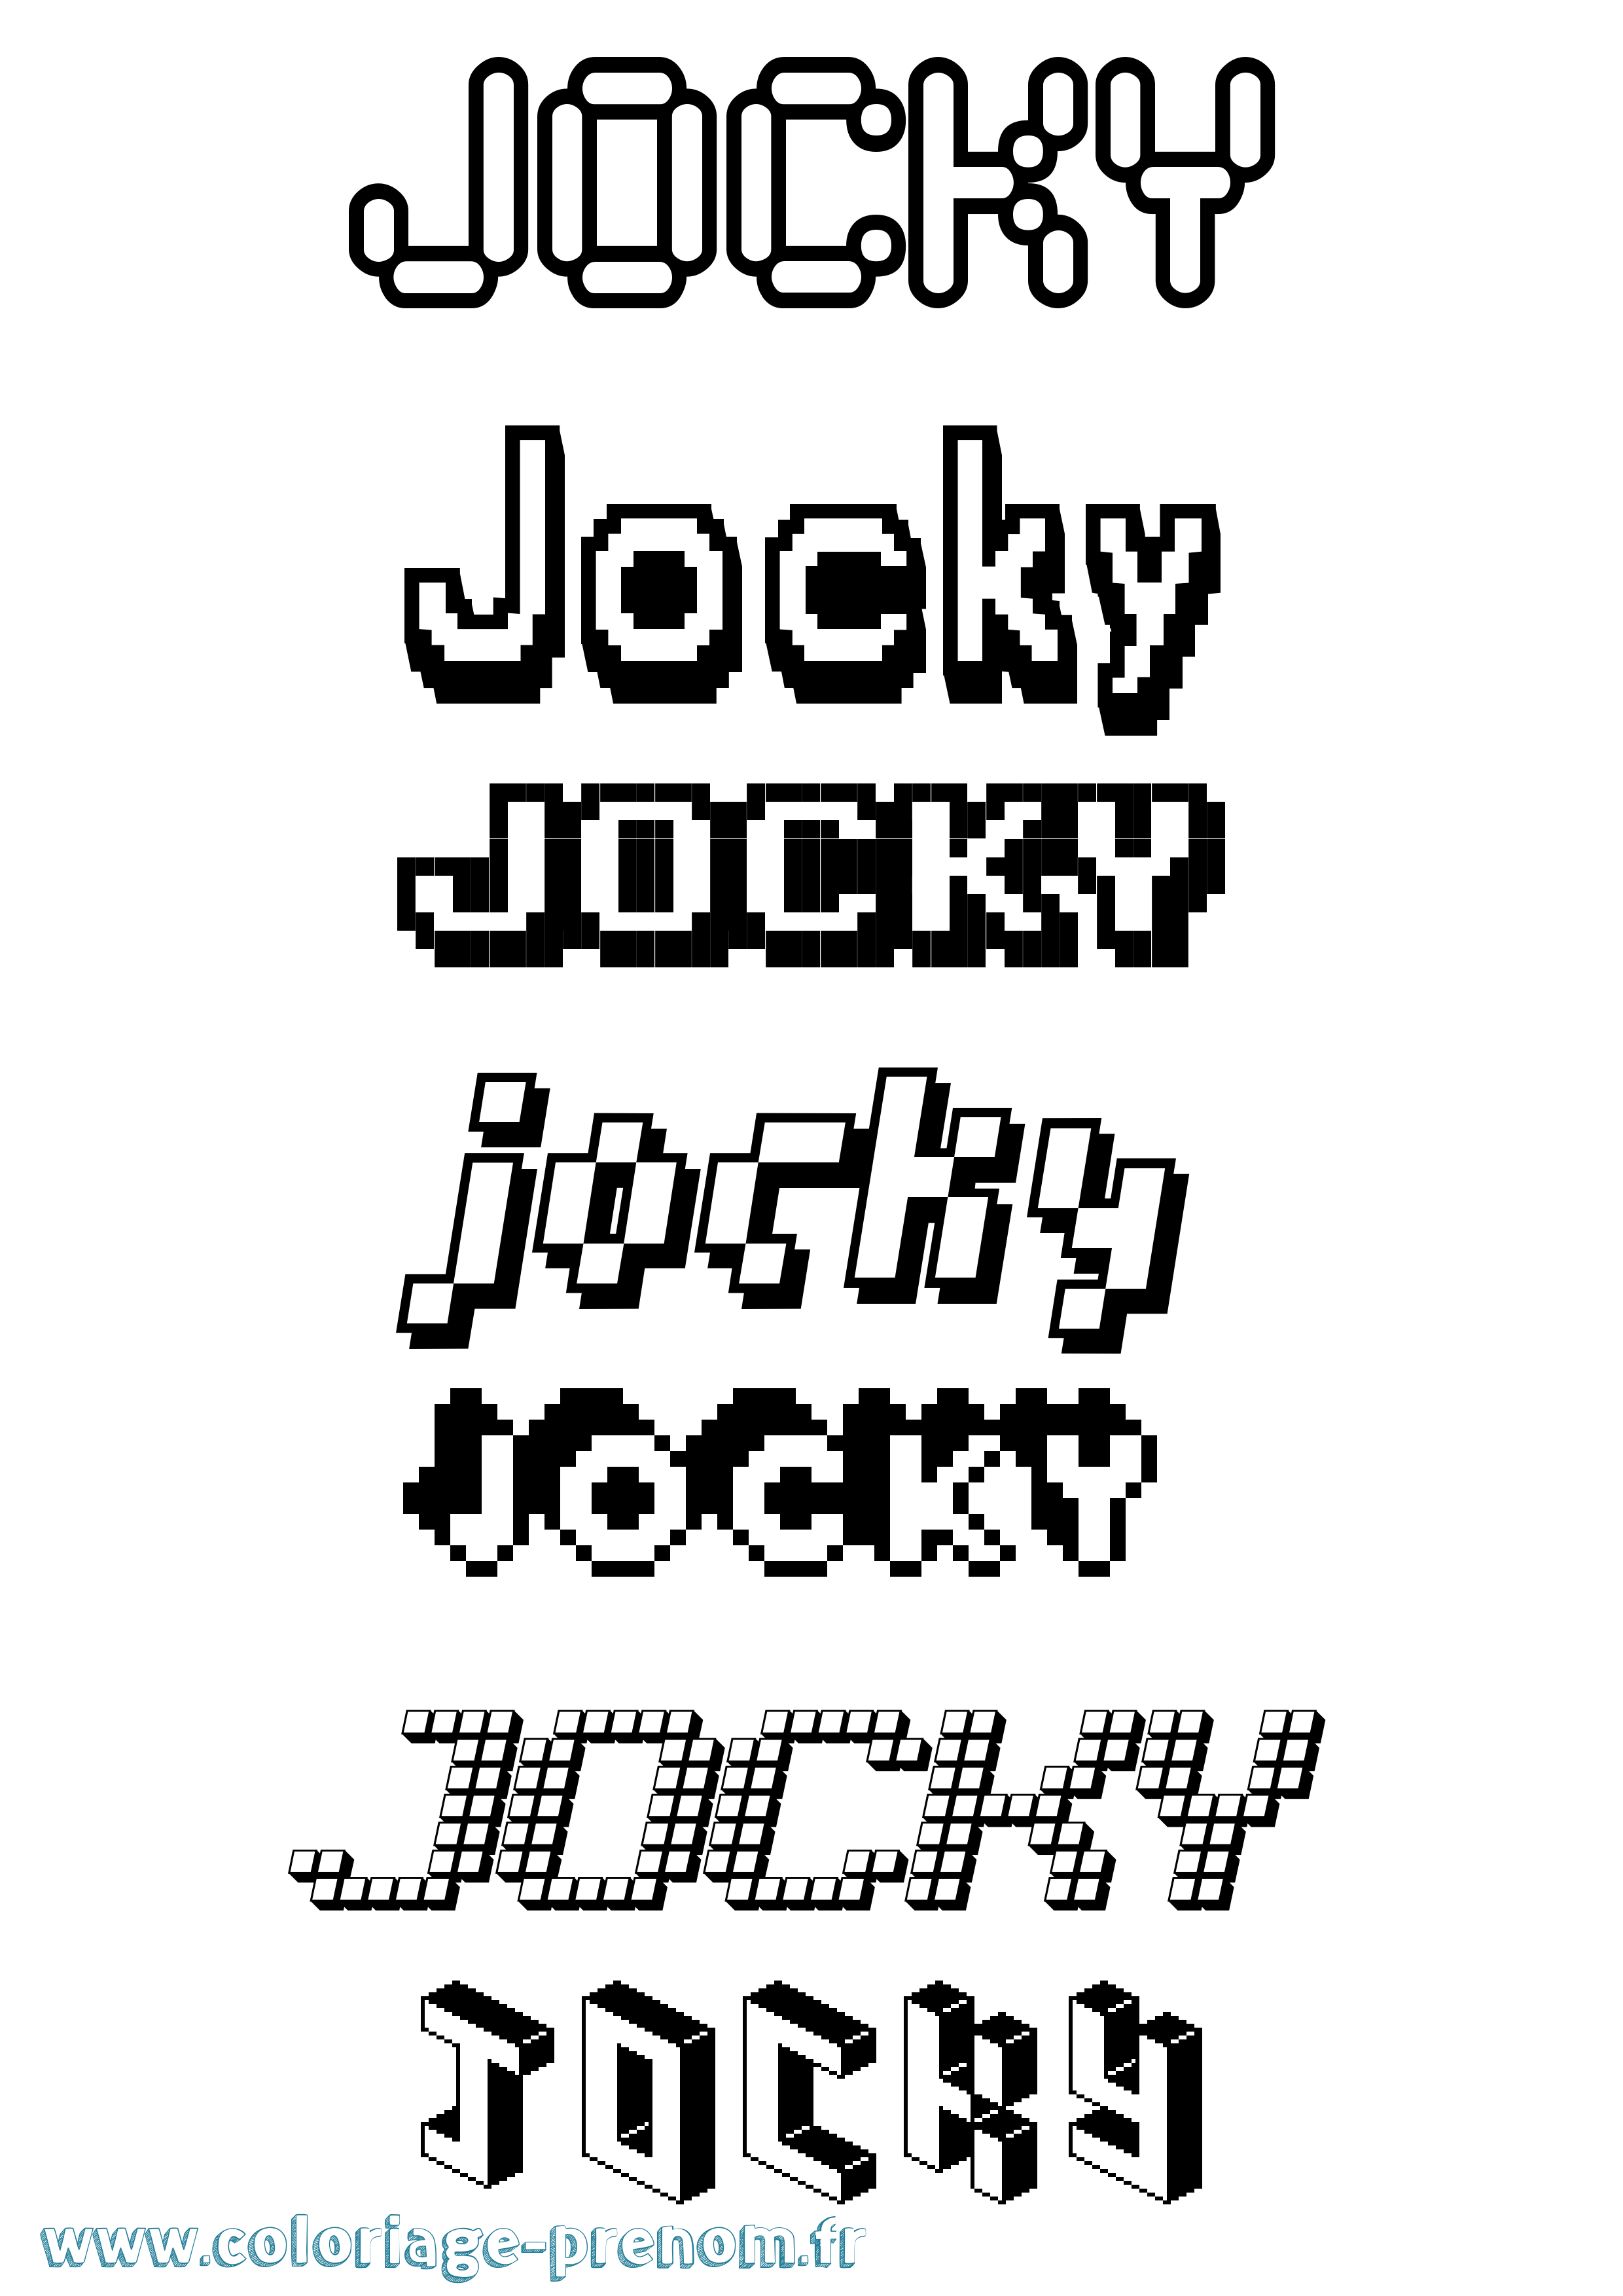 Coloriage prénom Jocky Pixel